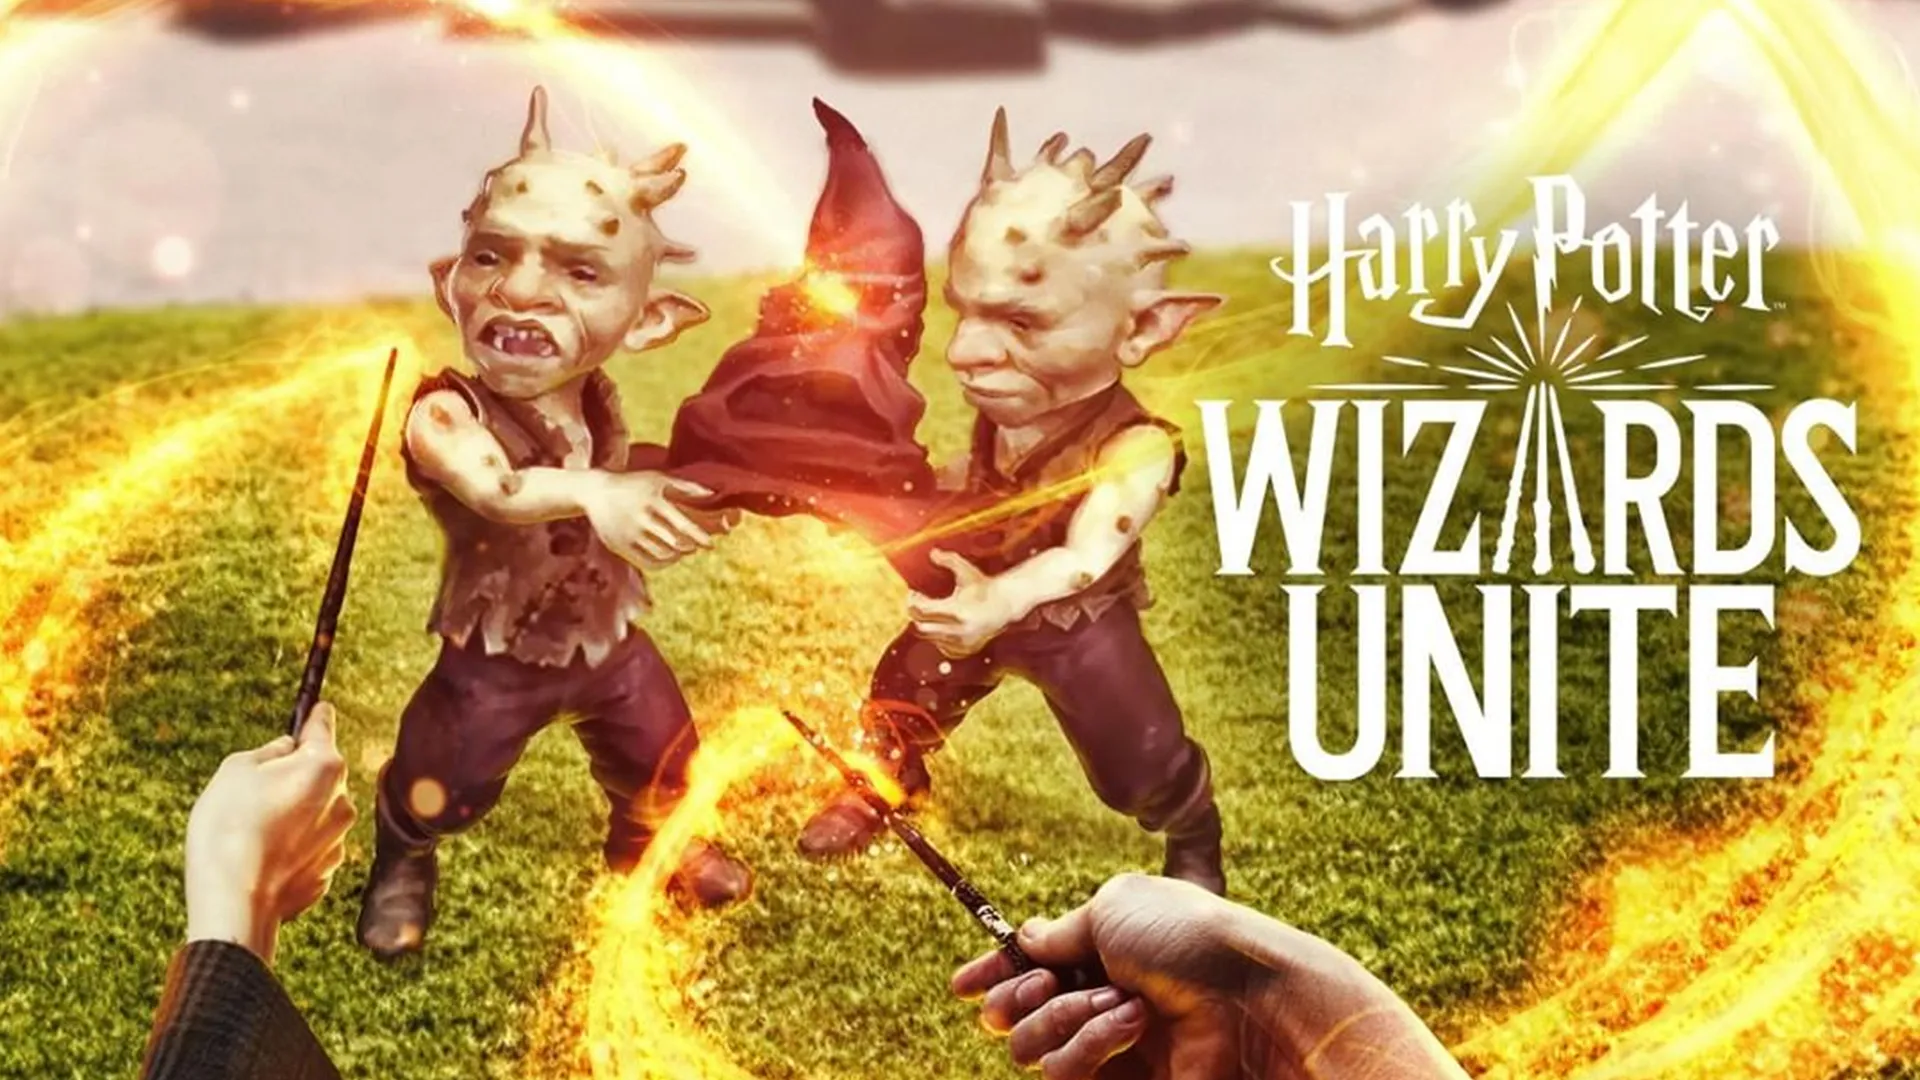 Harry Potter Wizards Unite Battery Saver